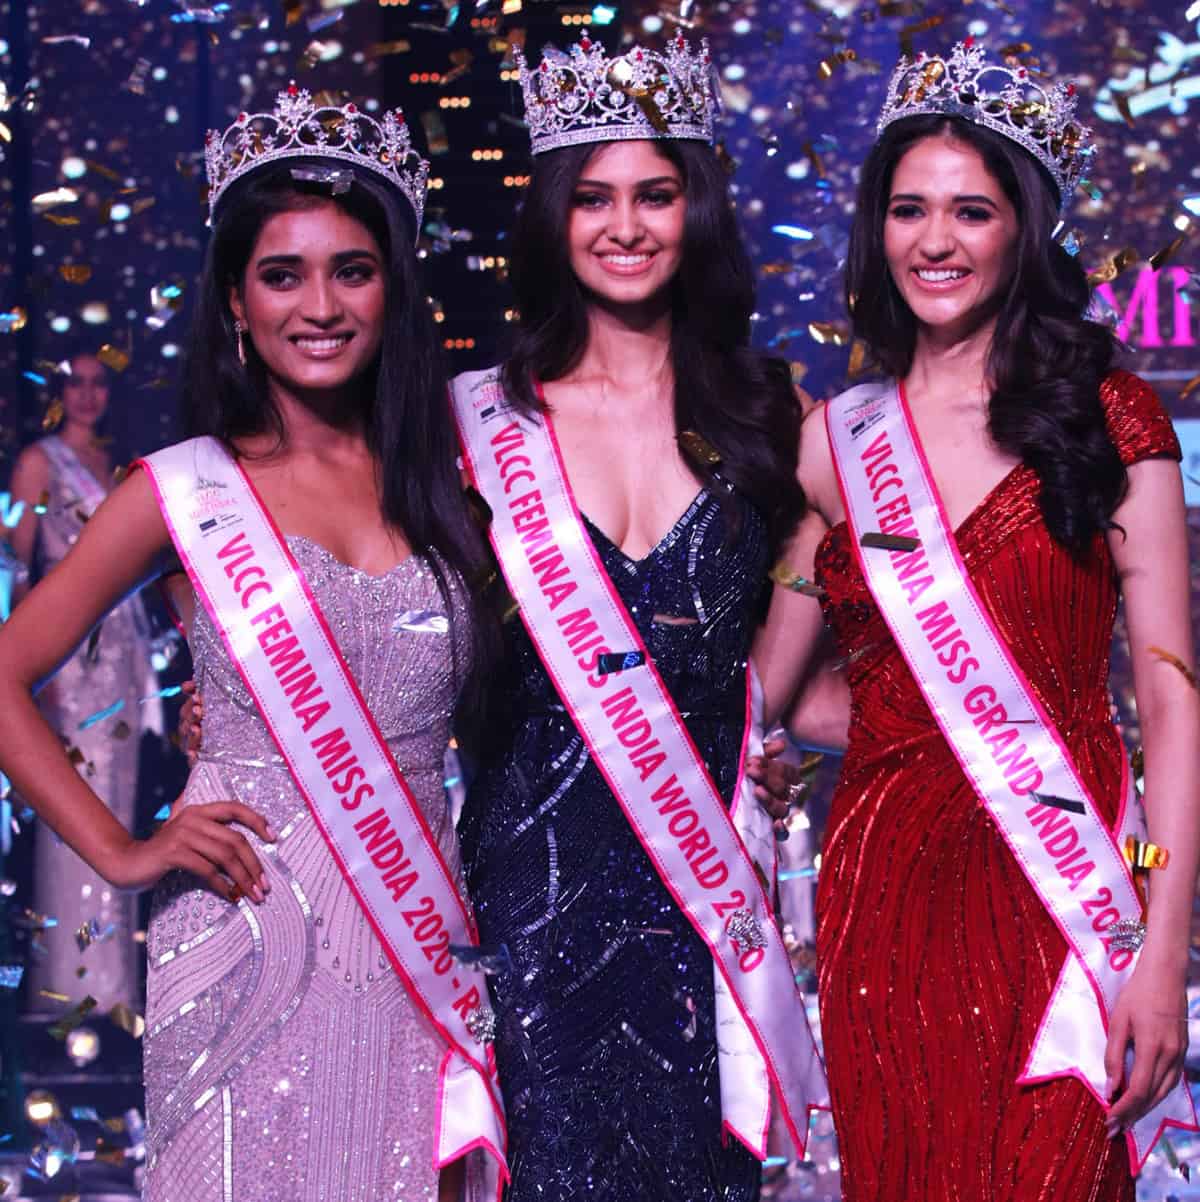 Femina Miss India 2020 winners - Manasa Varanasi, Manya Singh, Manika Sheokand